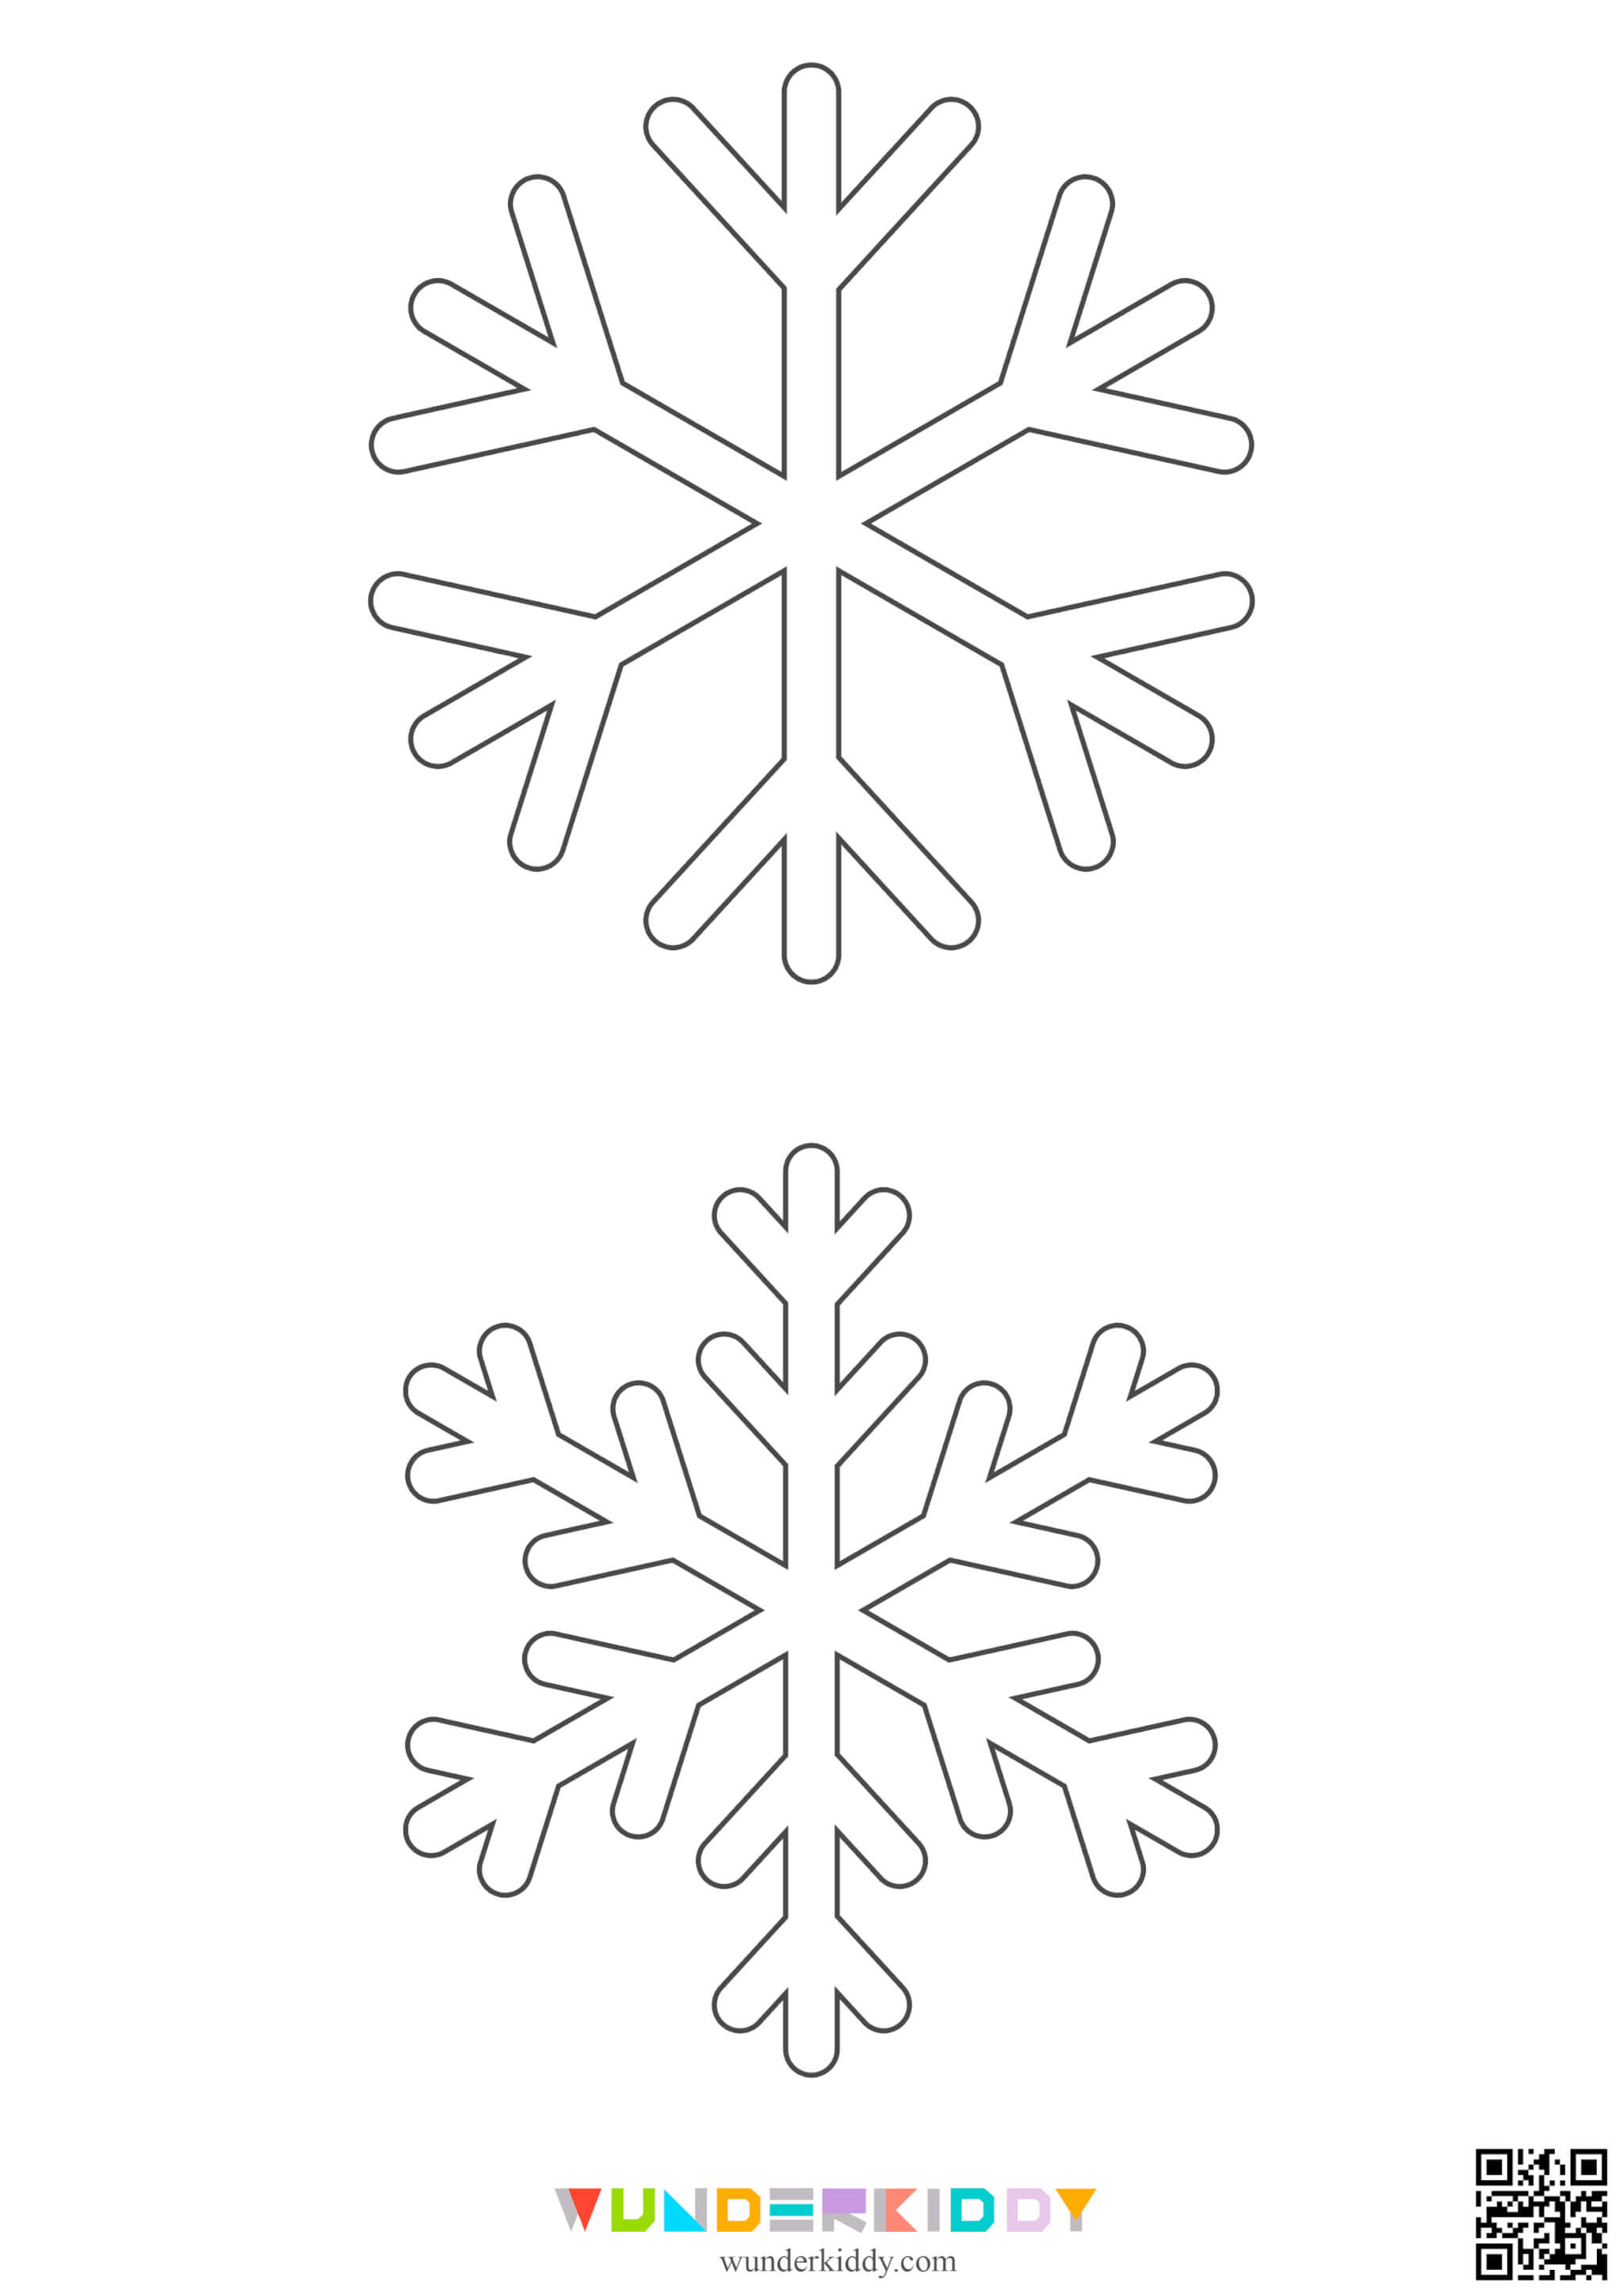 Snowflake Stencil Patterns - Image 21